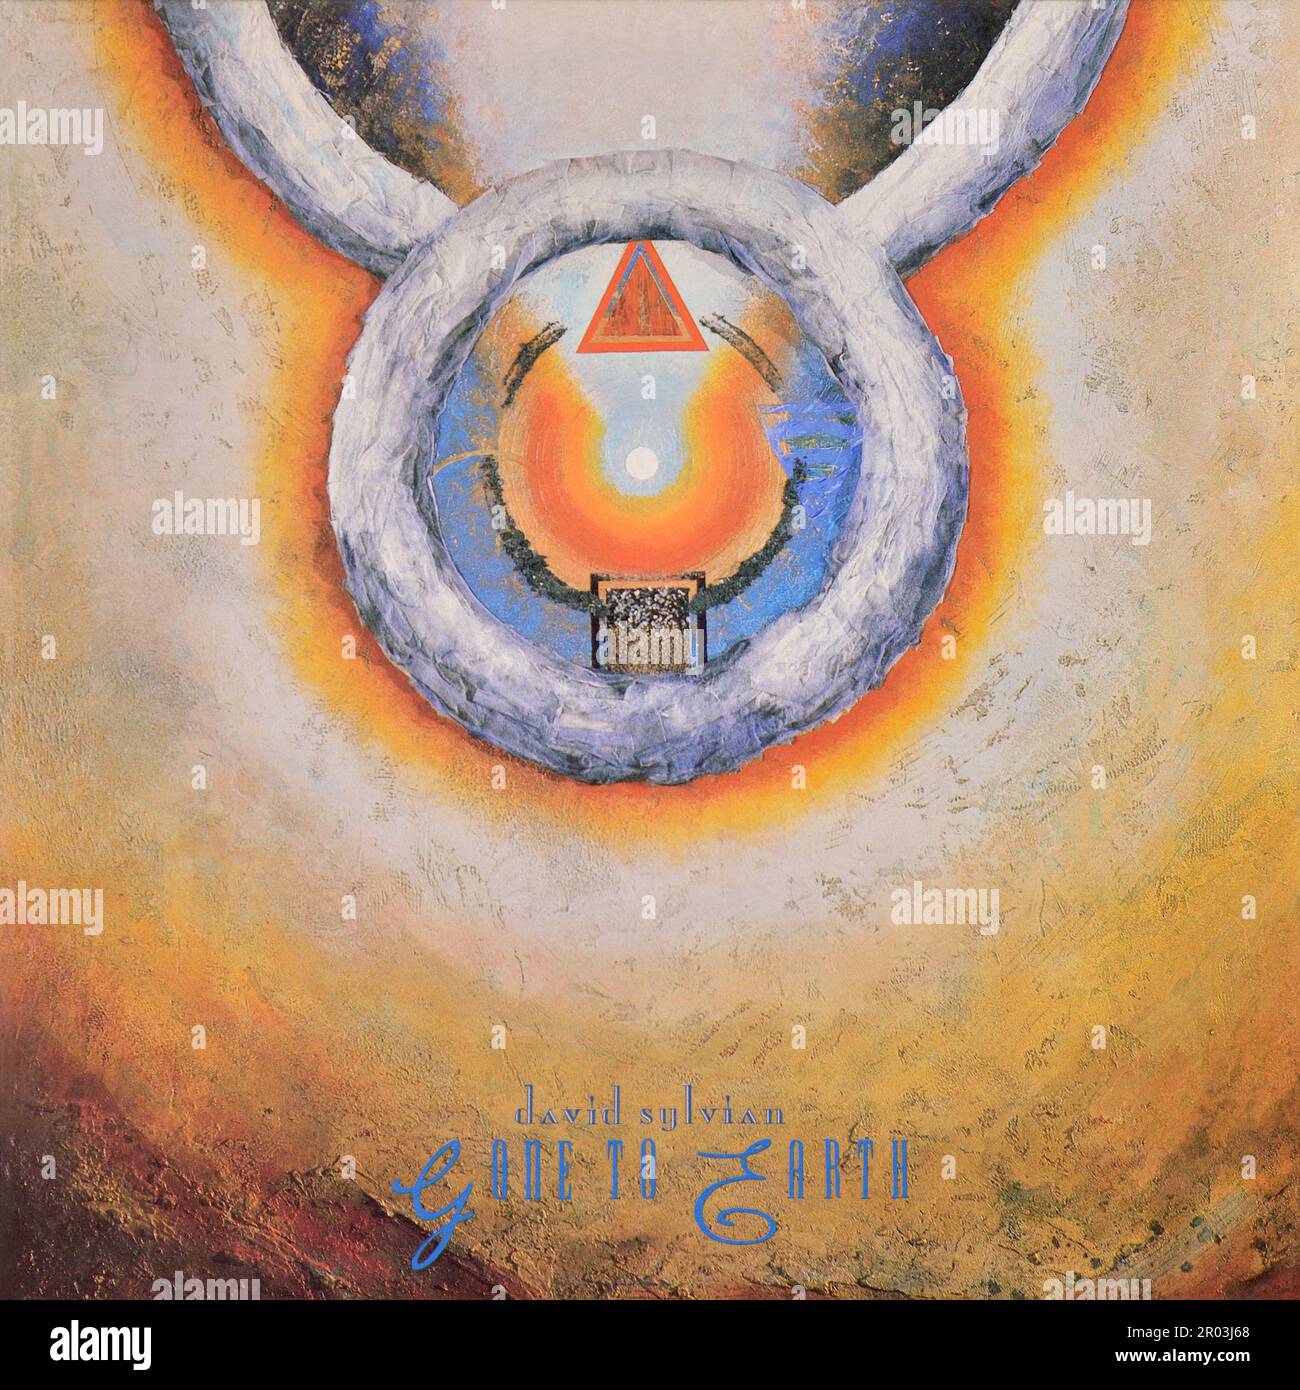 David Sylvian - original vinyl album cover - Gone to Earth - 1986 Stock Photo